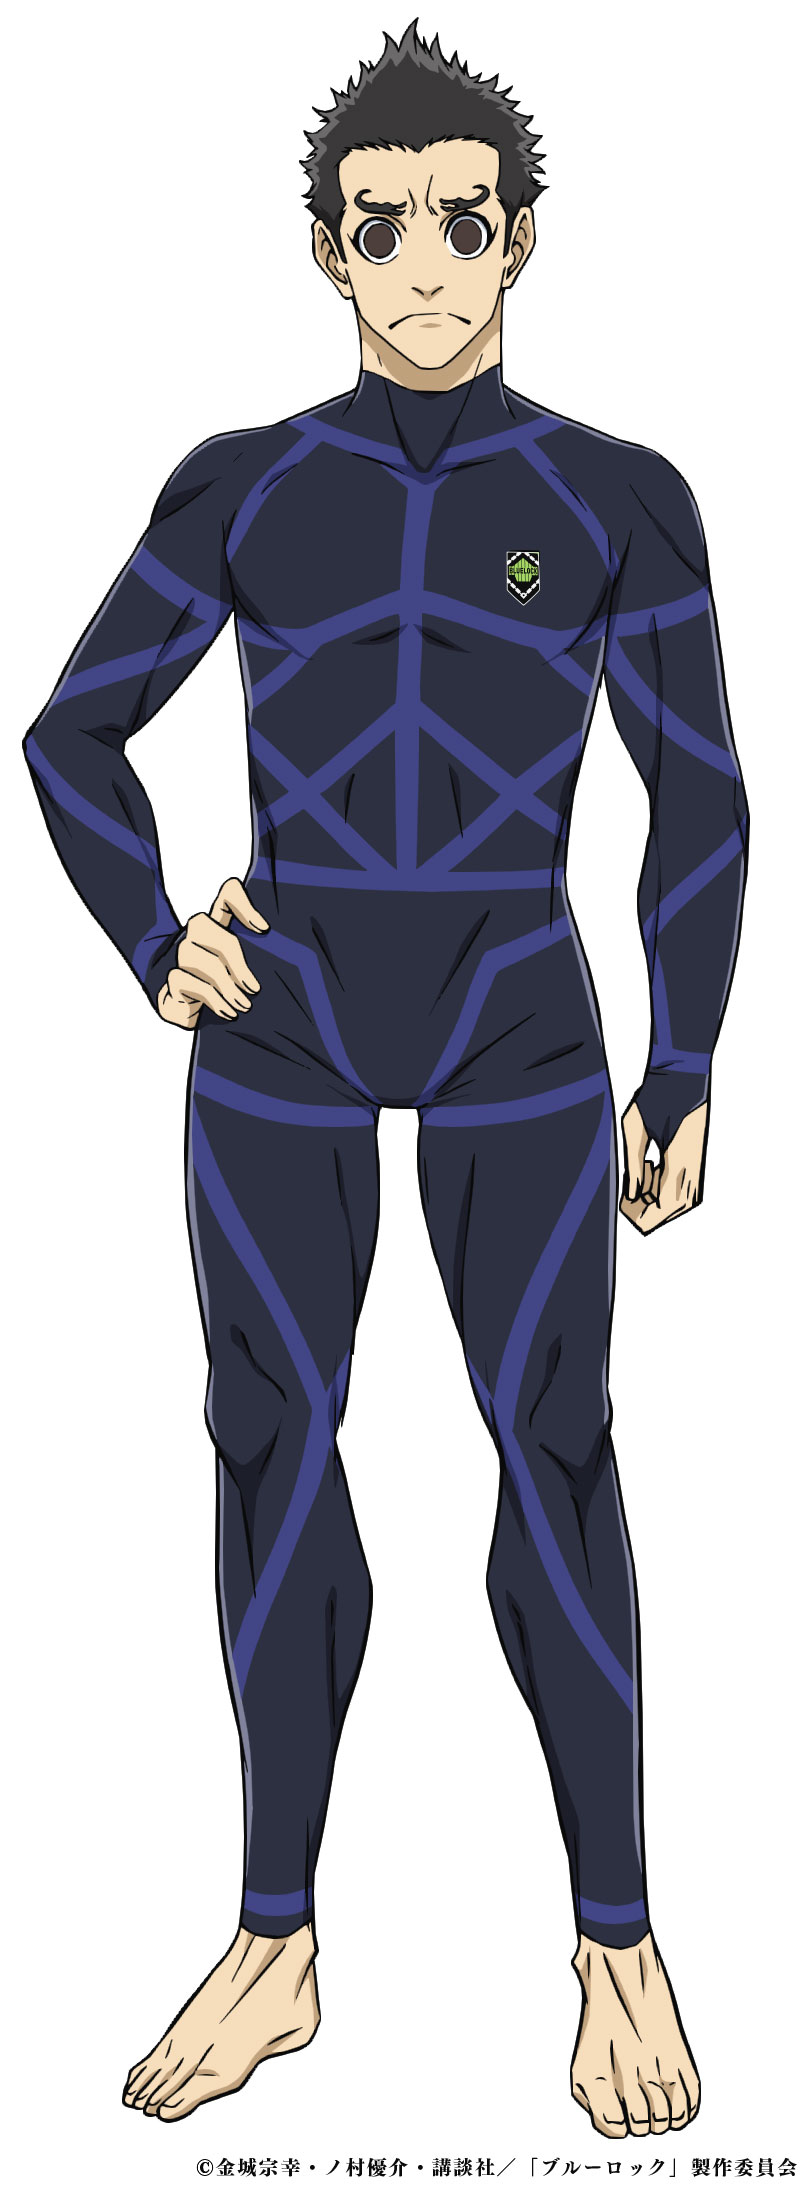 BLUELOCK Junichi Wanima character design